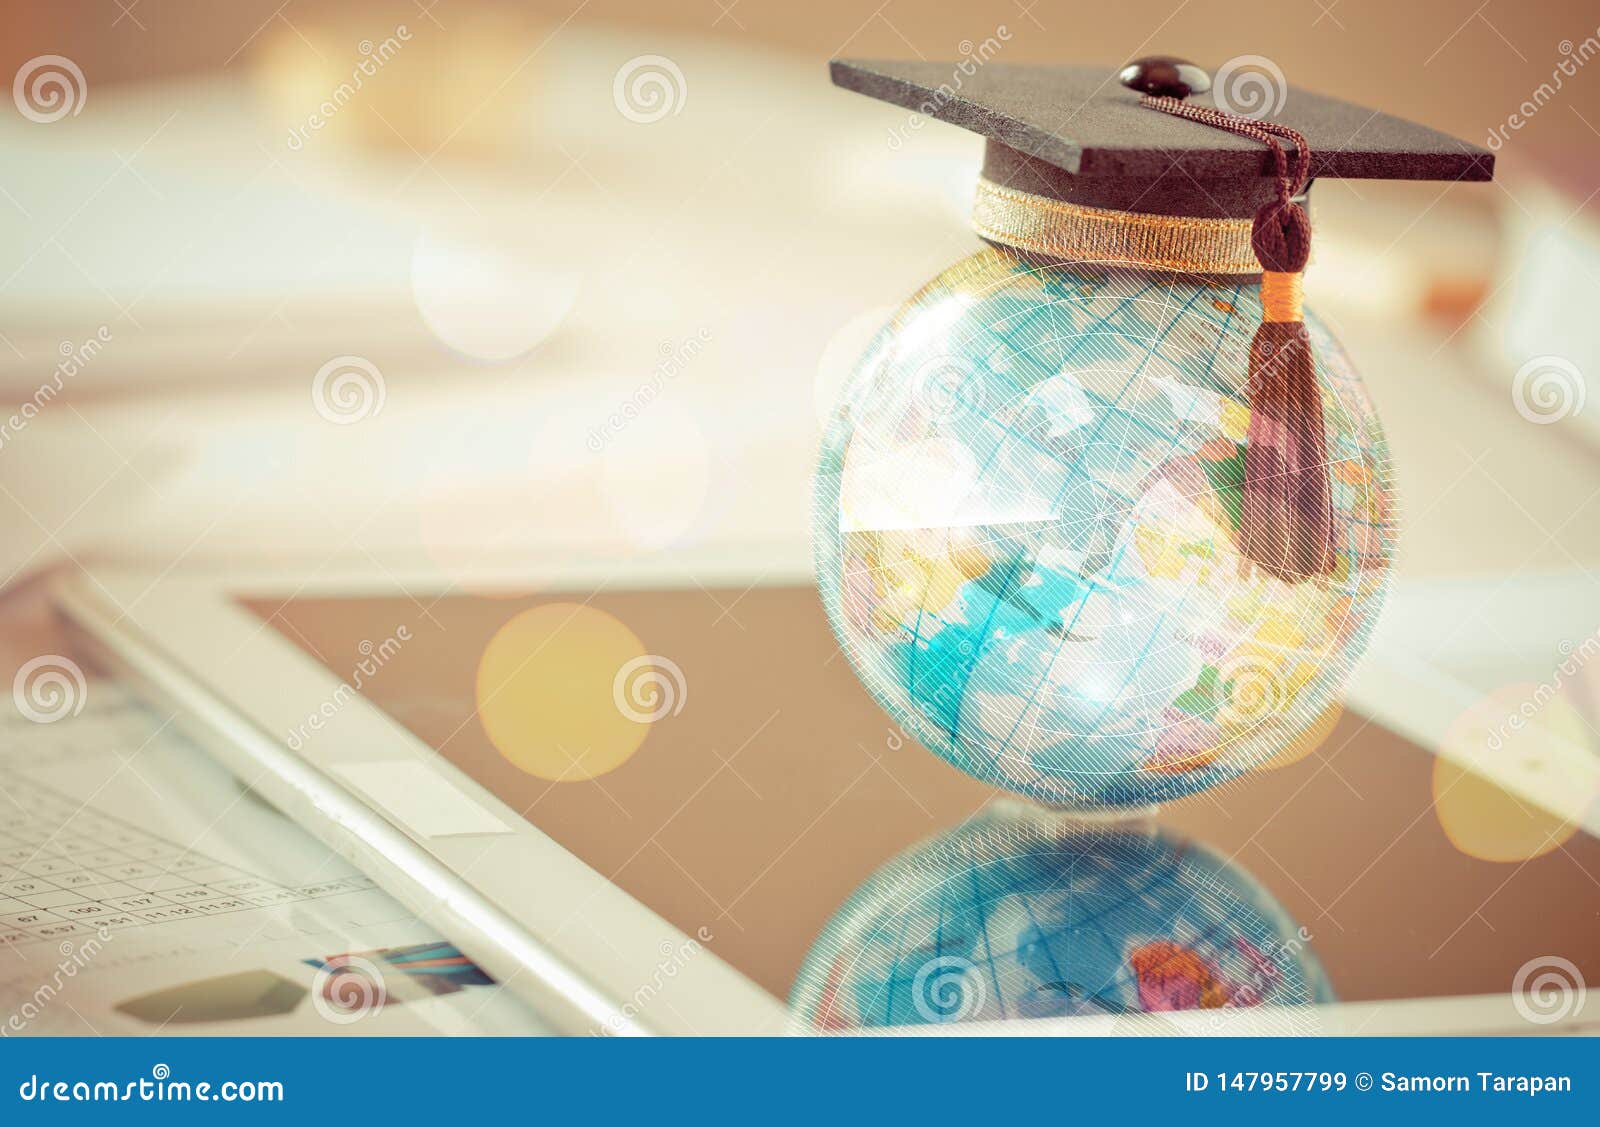 graduate study abroad concept, graduation cap on top earth globe model map on laptop with radar background. graduate study abroad